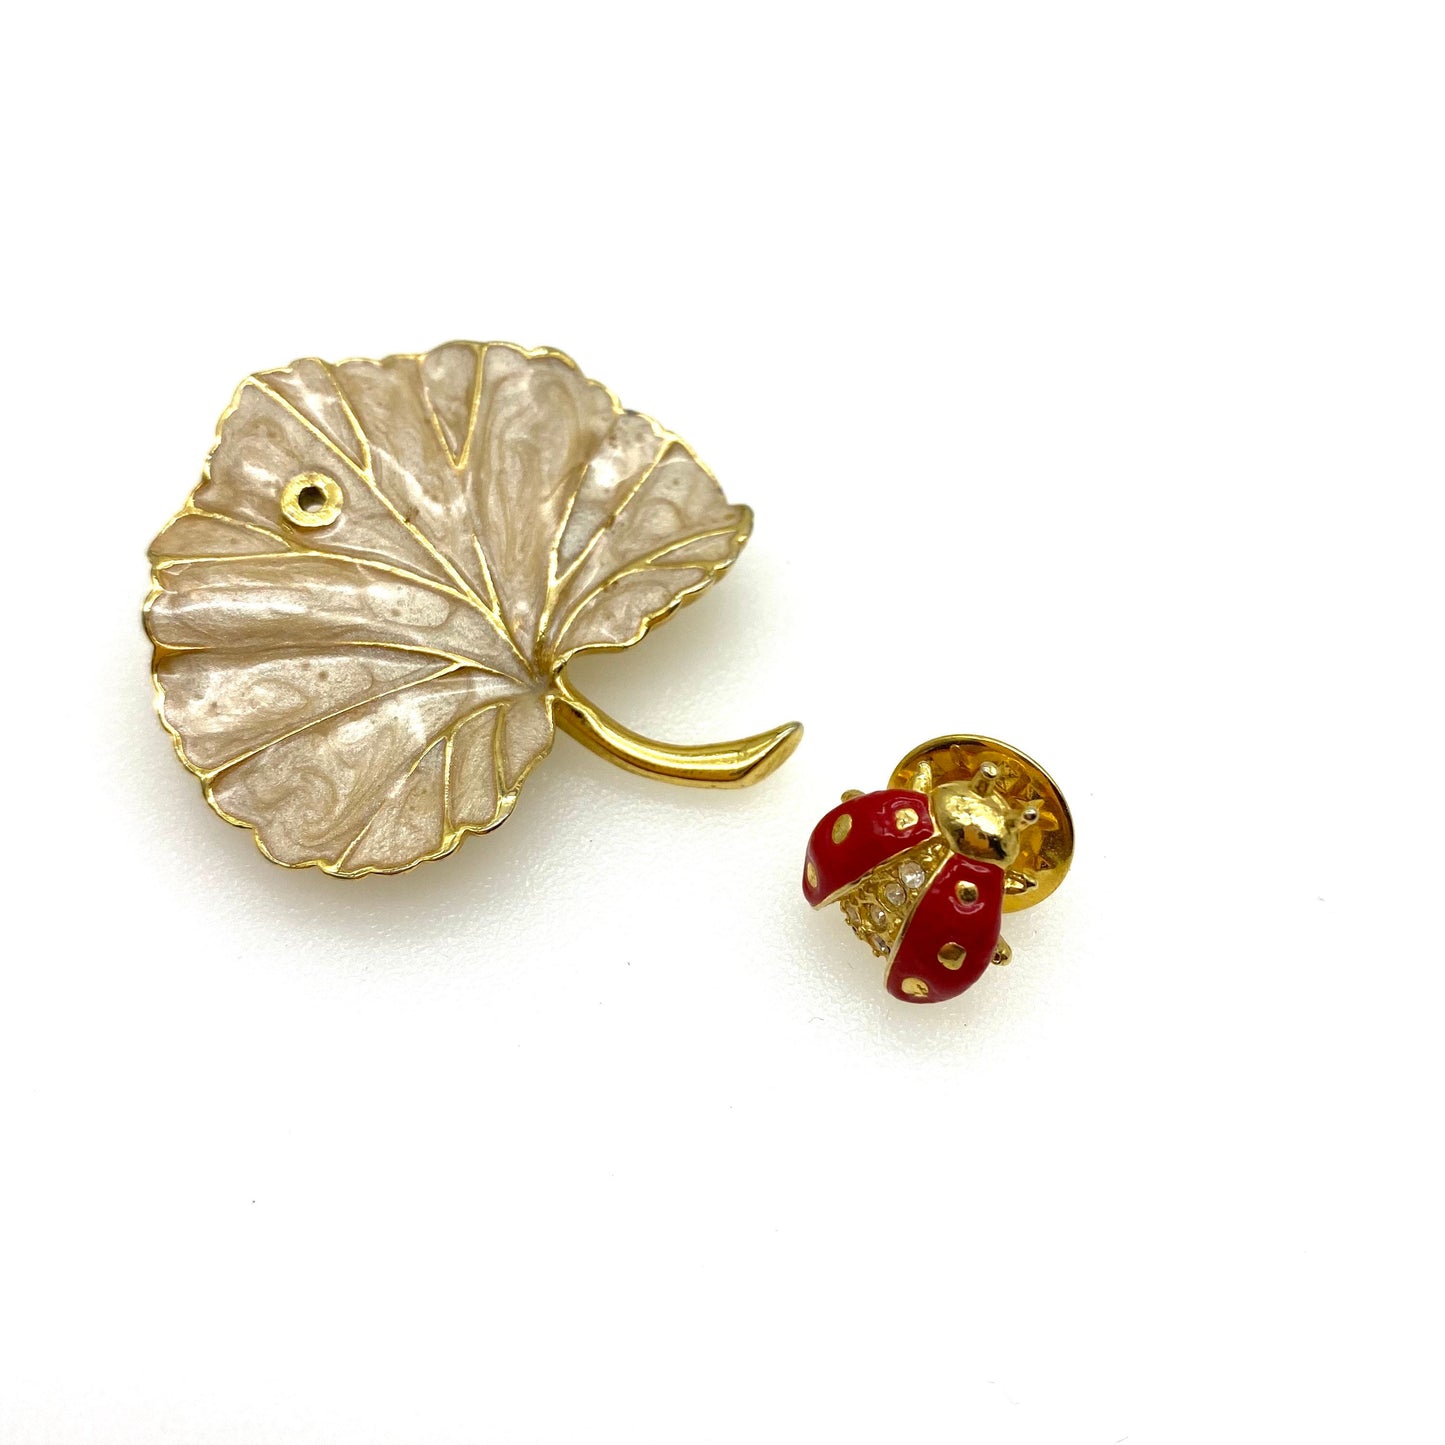 Avon (signed S©P on reverse) duet ladybird pin/leaf brooch